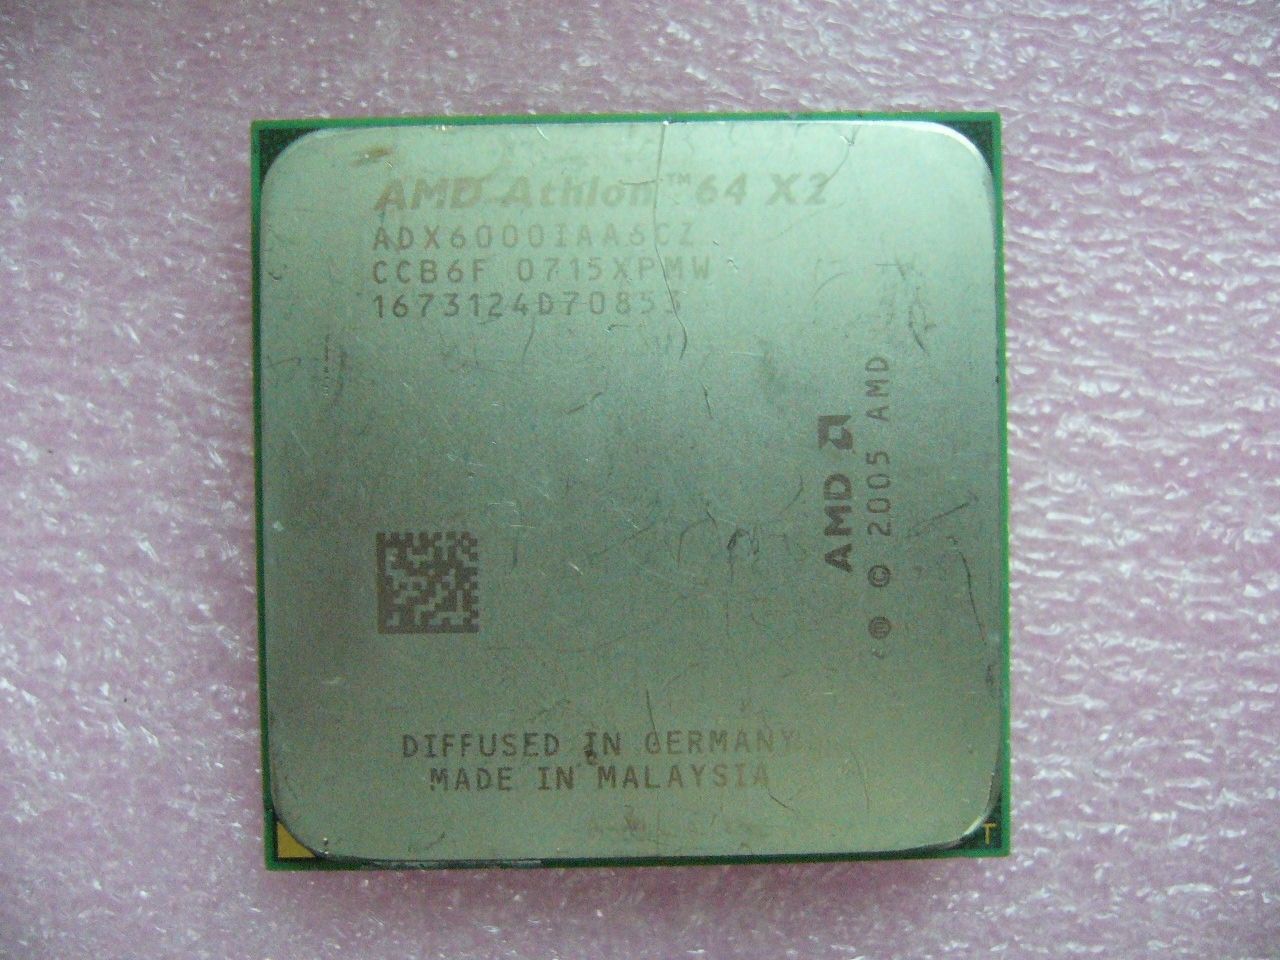 QTY 1x AMD Athlon 64 X2 6000+ 3 GHz Dual-Core (ADX6000IAA6CZ) CPU Socket AM2